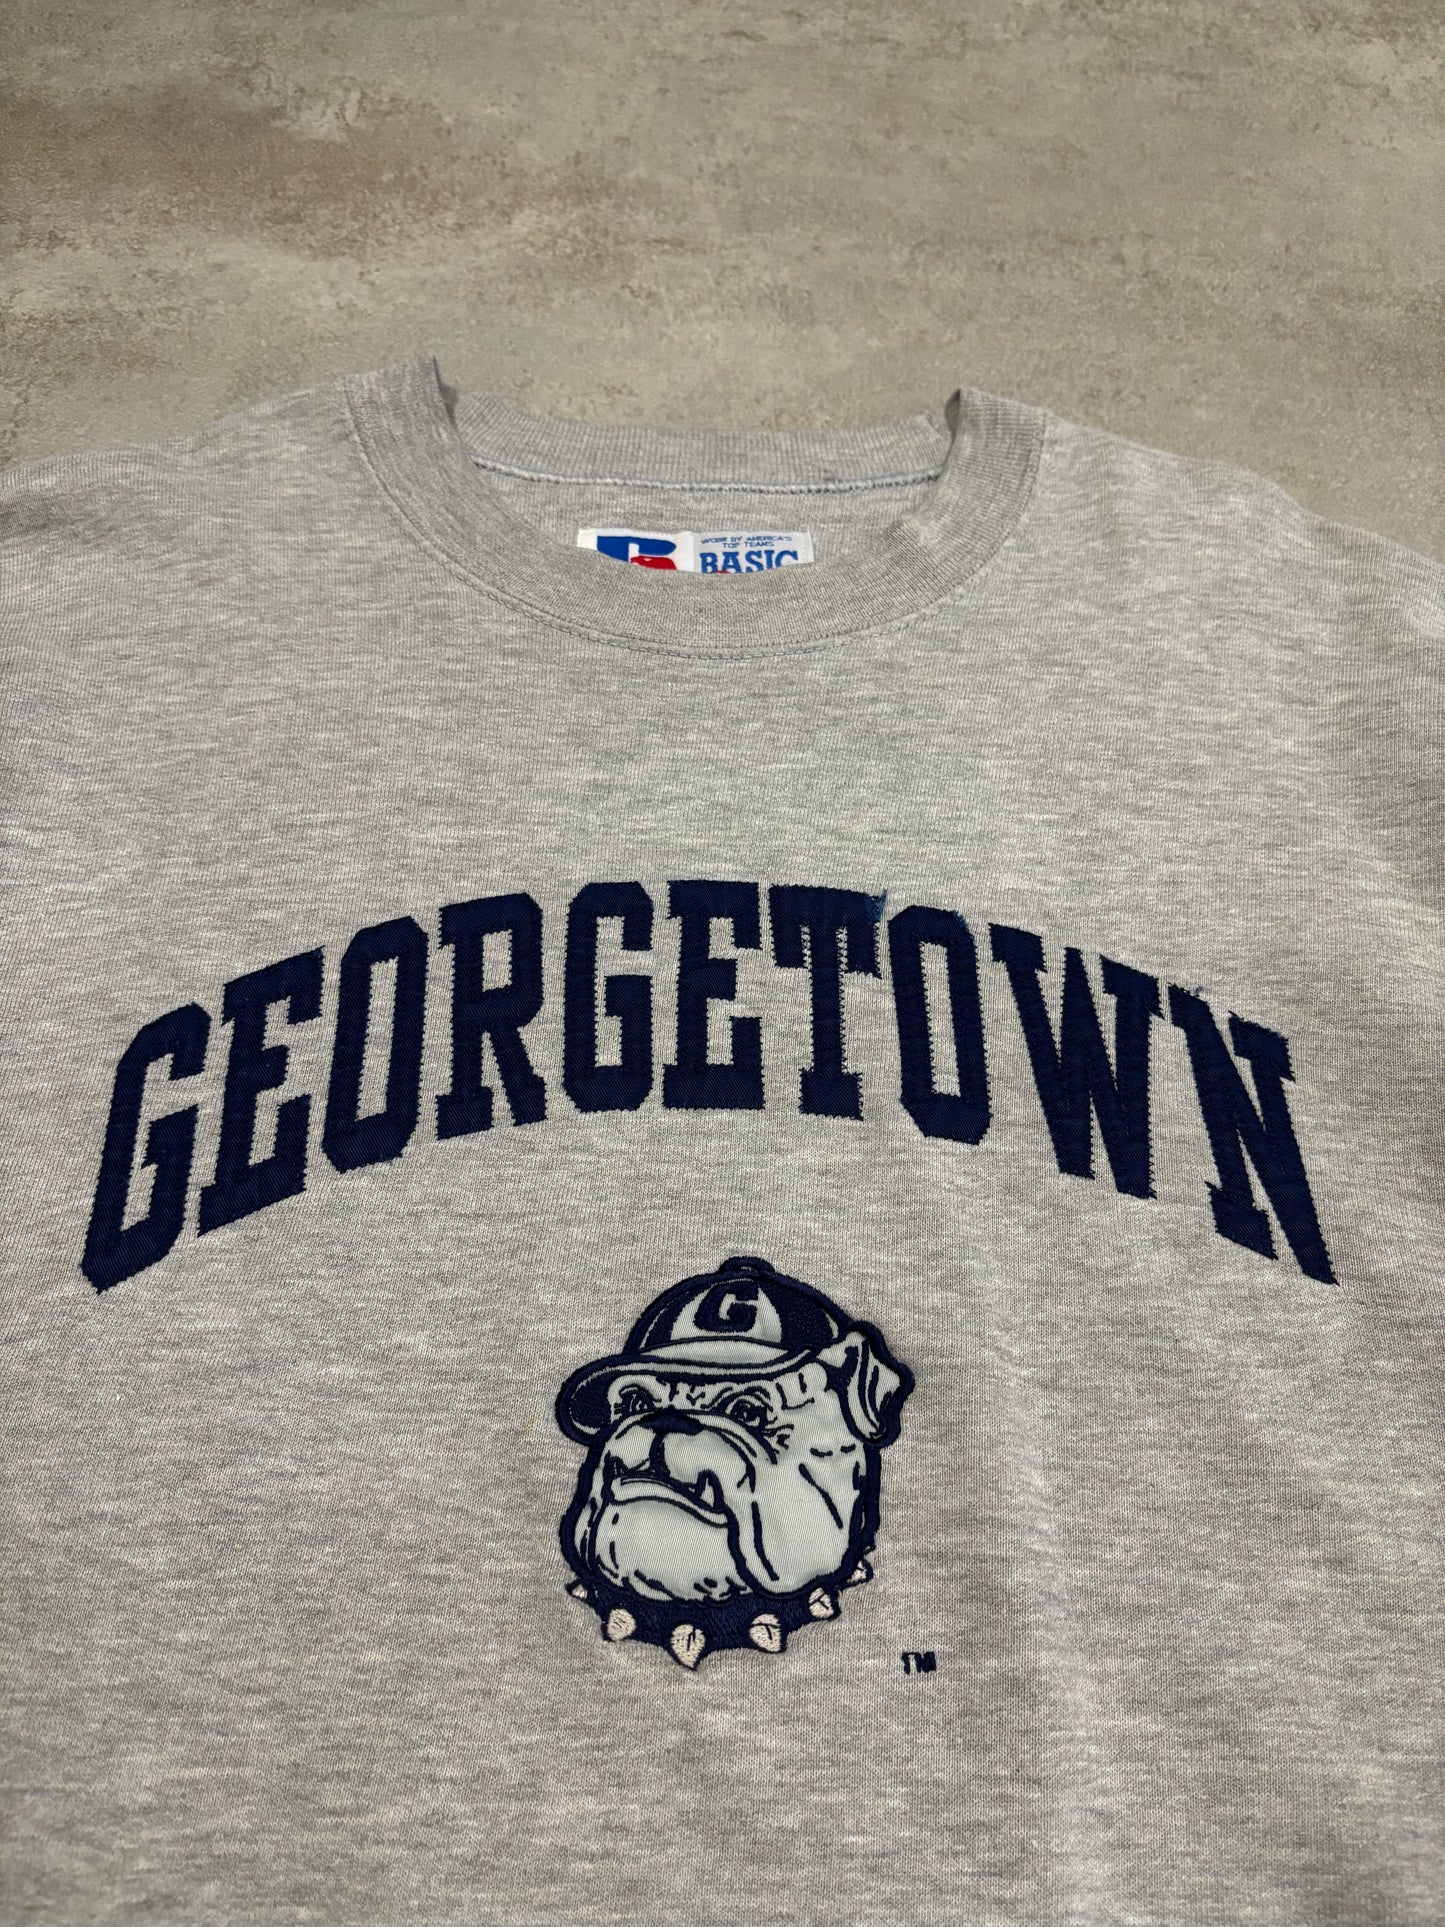 Vintage Russell Made In USA 'Georgetown' 90's Sweatshirt - L